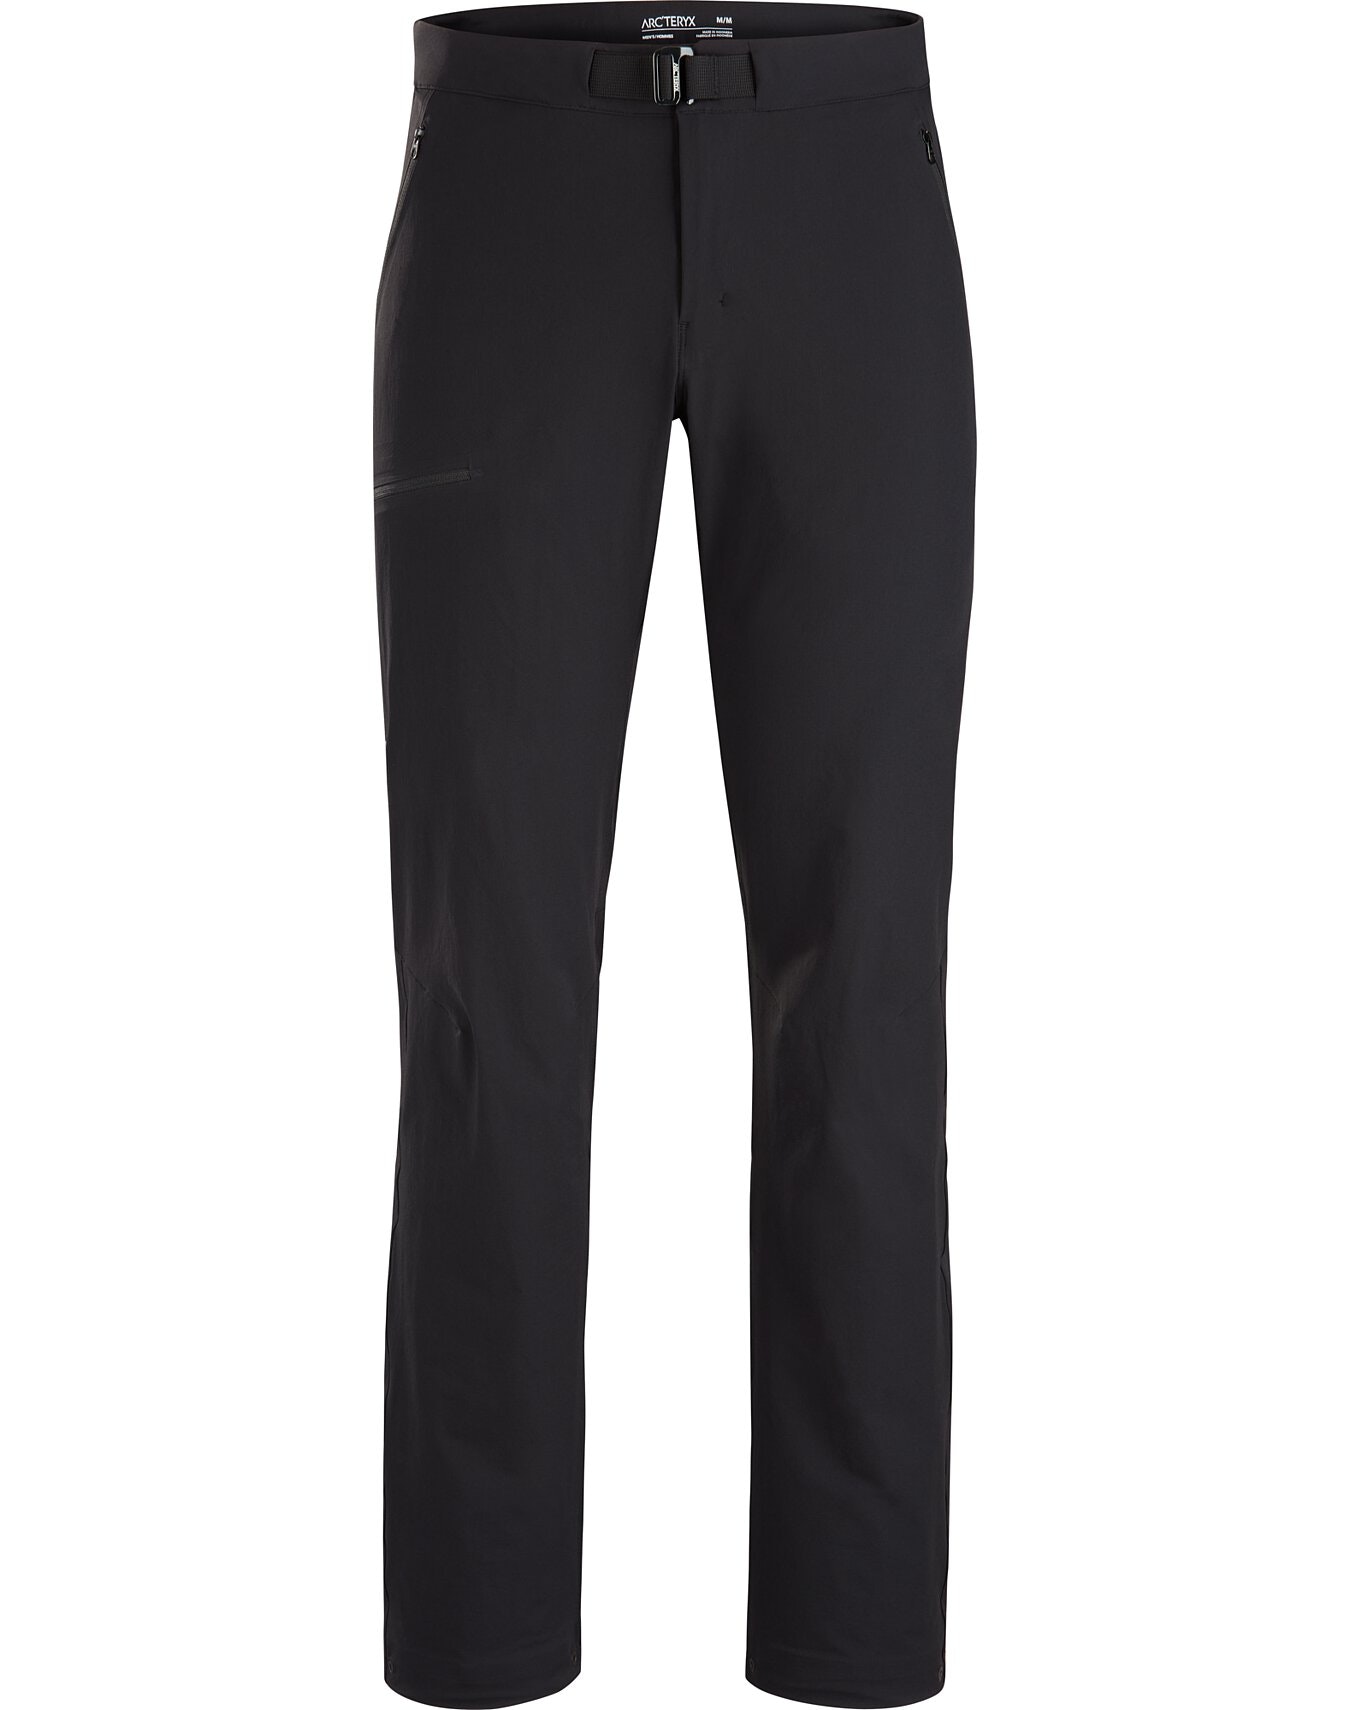 H&M Men's Large Regular Fit Stretch Elastic Waist Black Cargo Pants | eBay